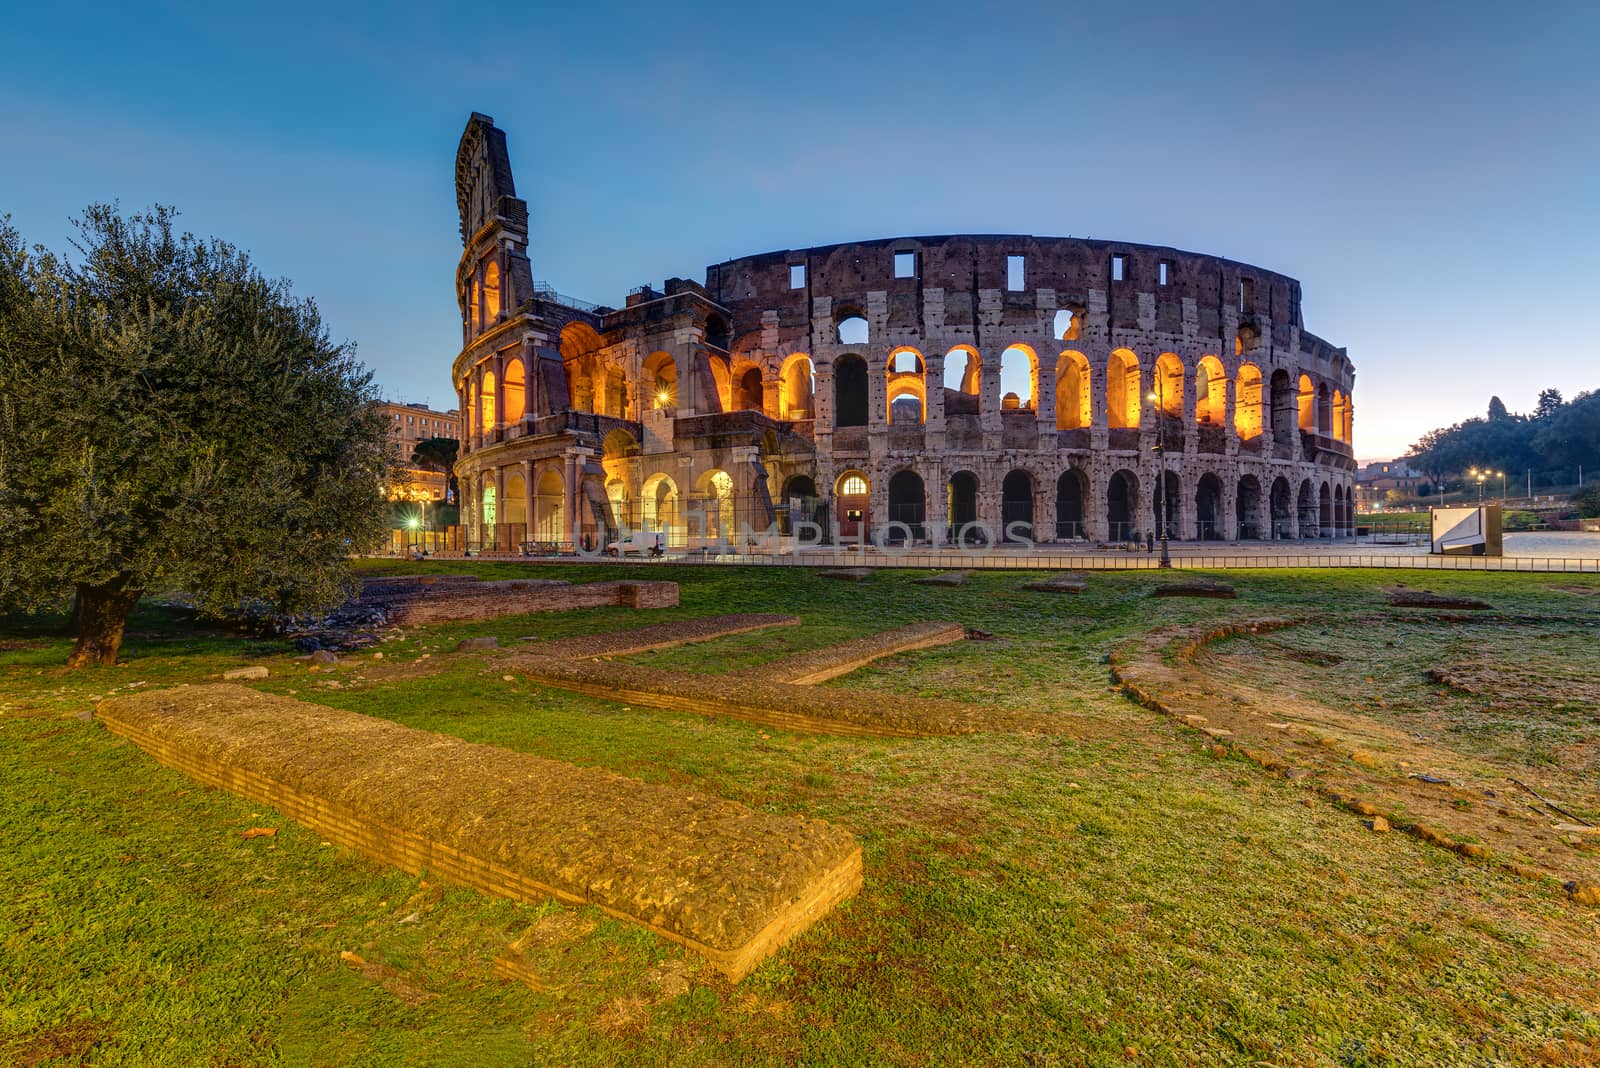 The illuminated Colosseum in Rome by elxeneize